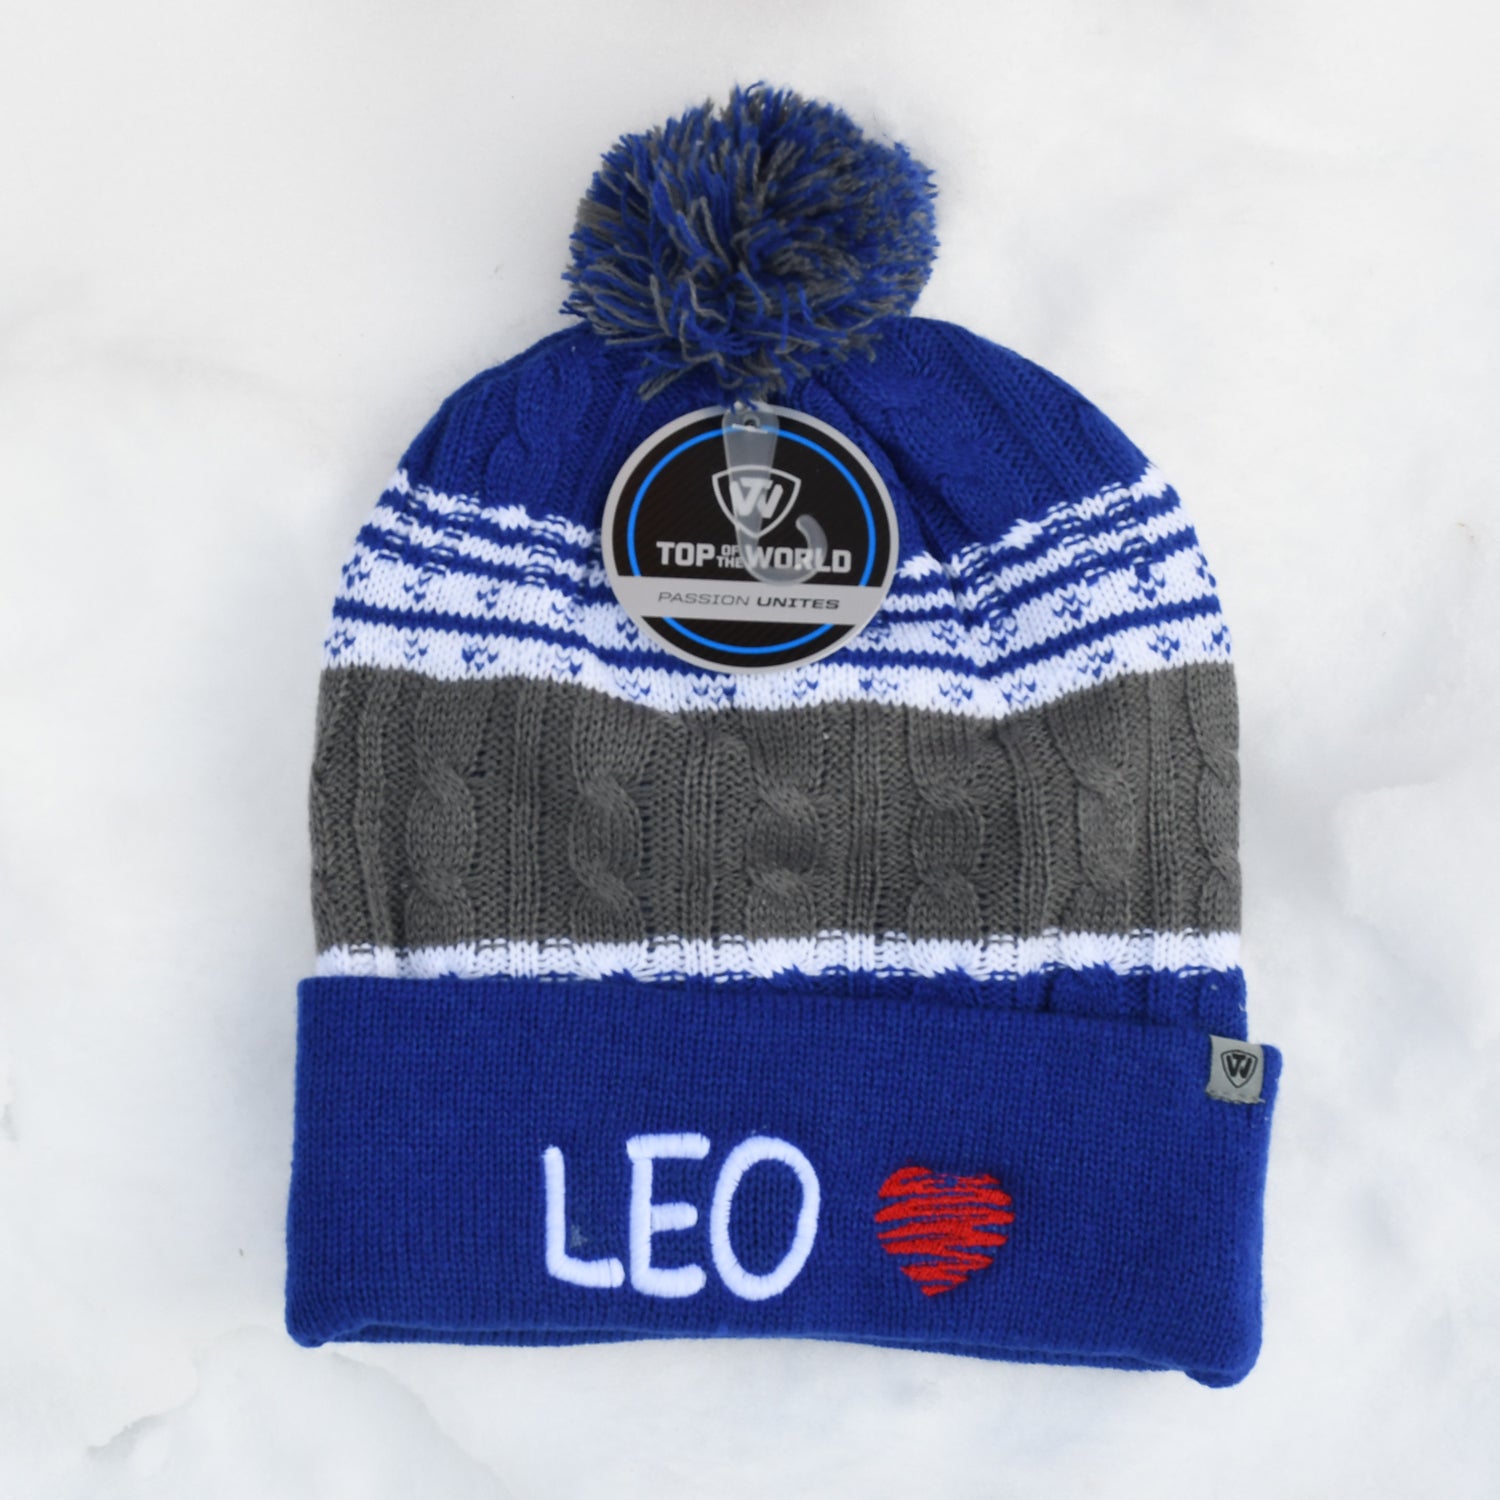 LEO winter hats